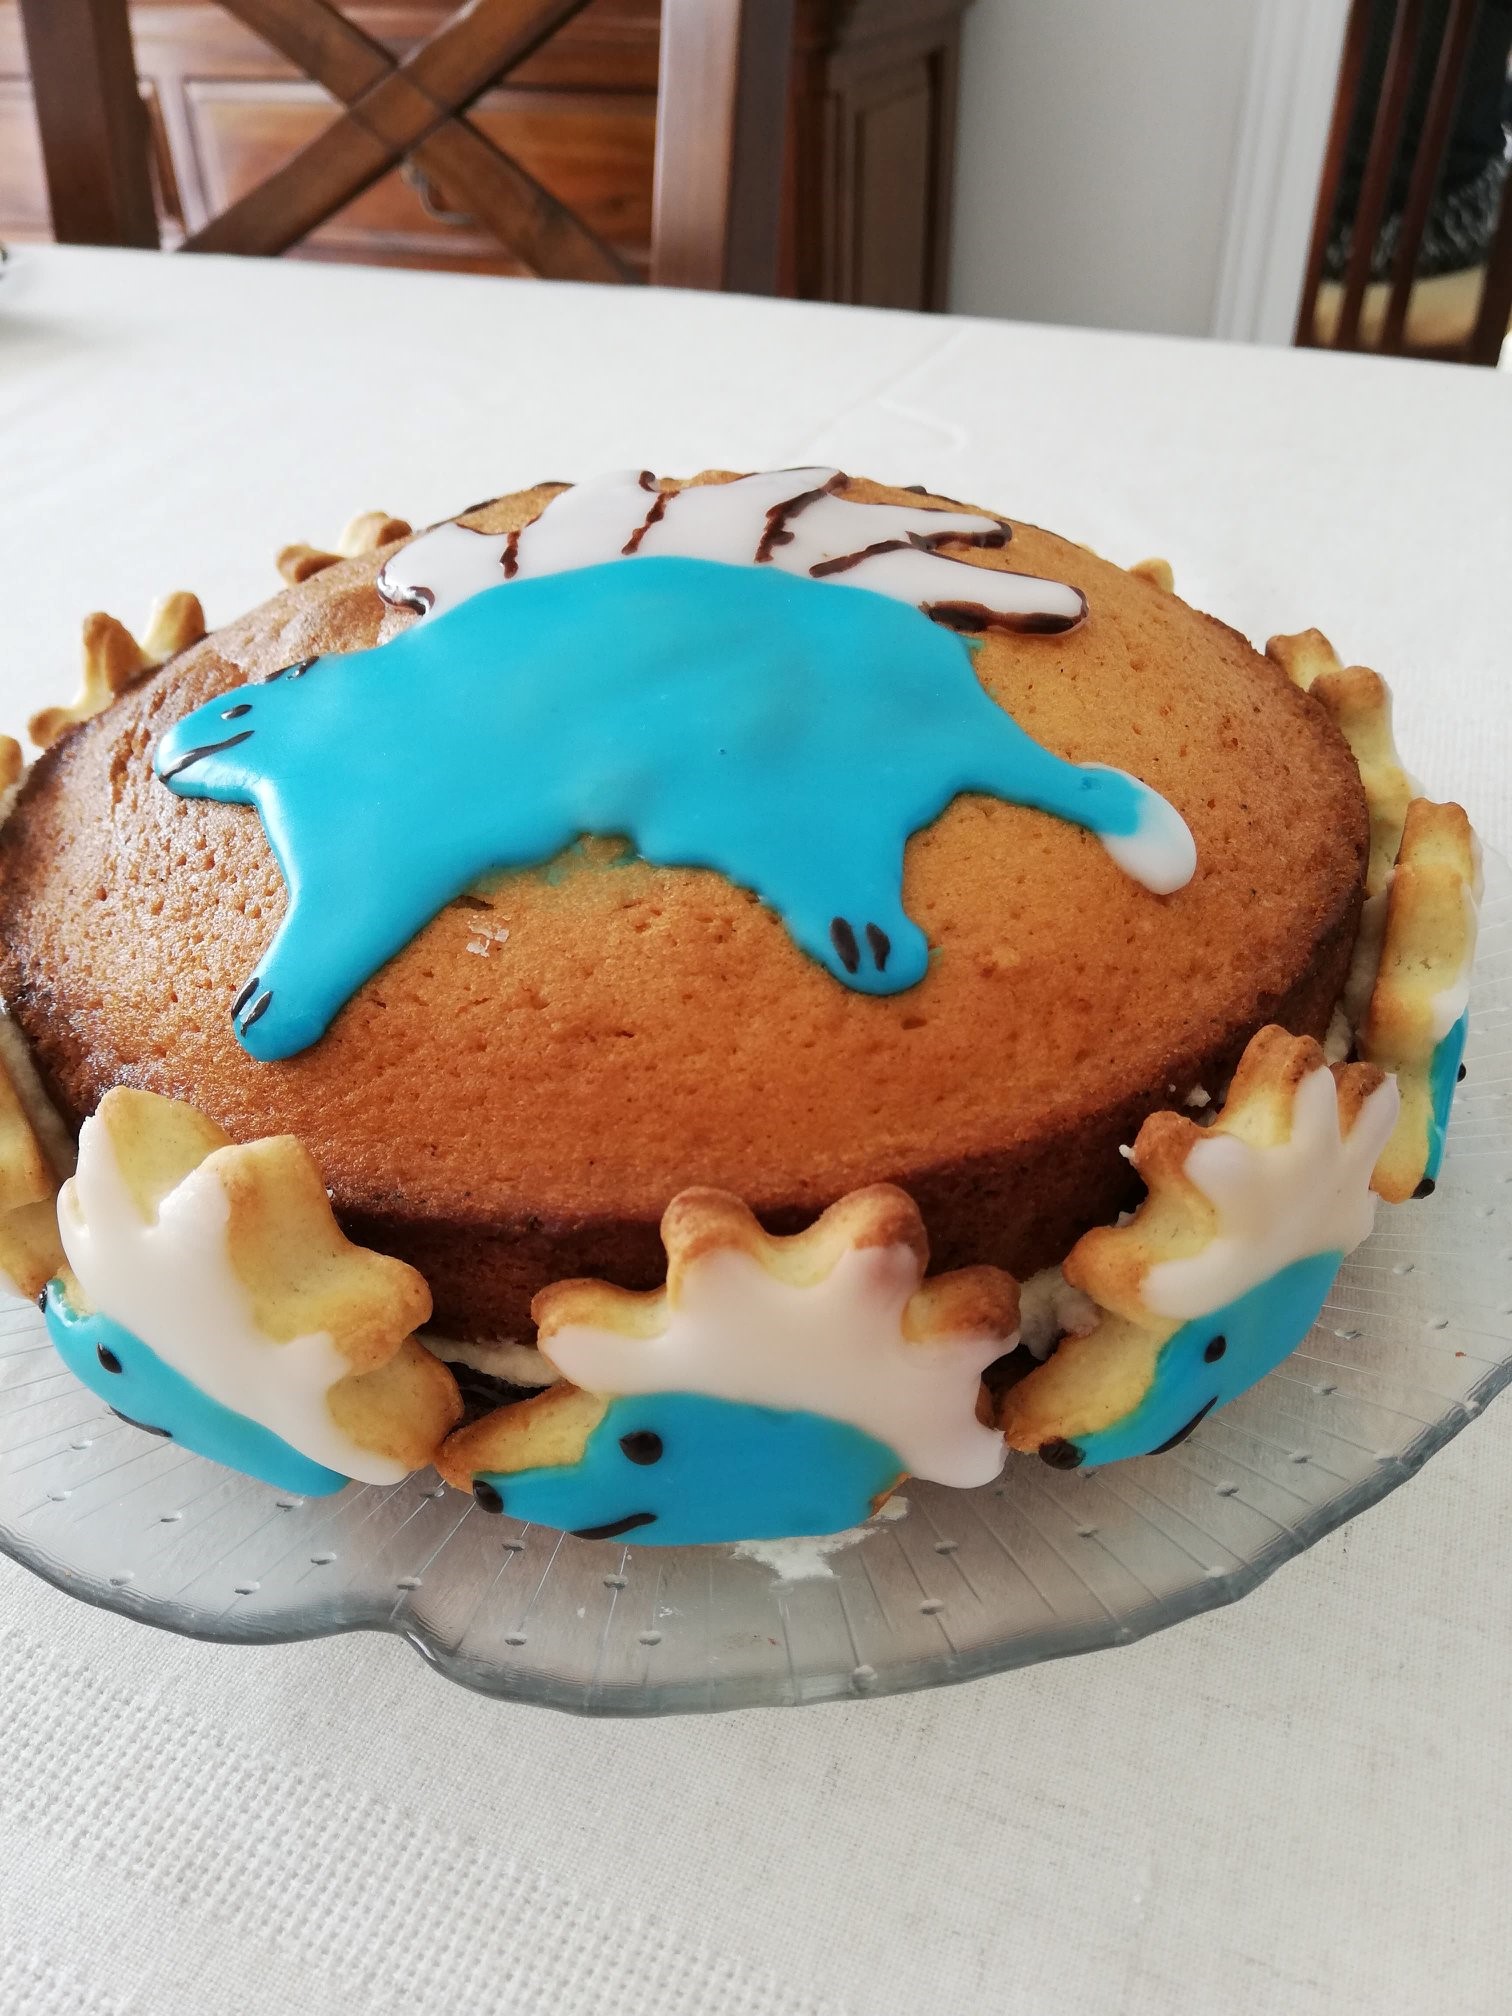 "Best porcupine themed bake" baked by Sofia Hryniv